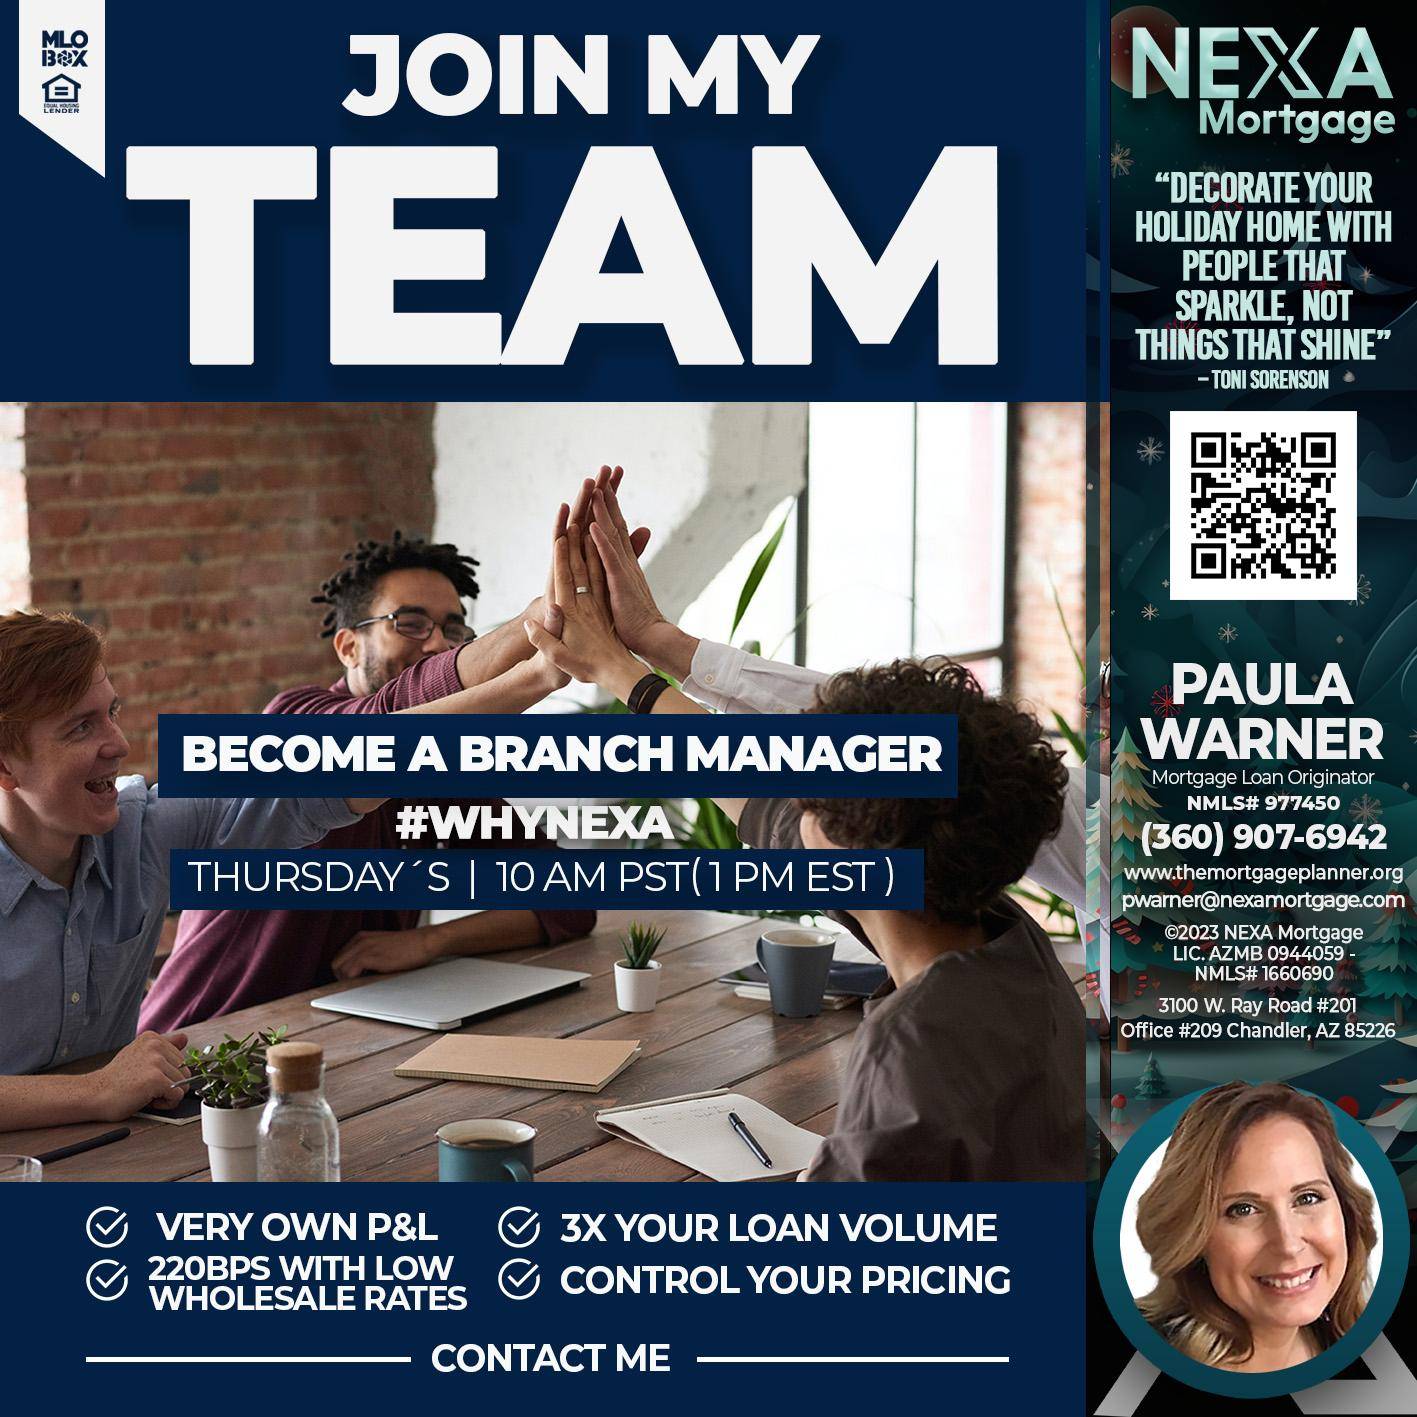 join my team - Paula Warner -Mortgage Loan Originator